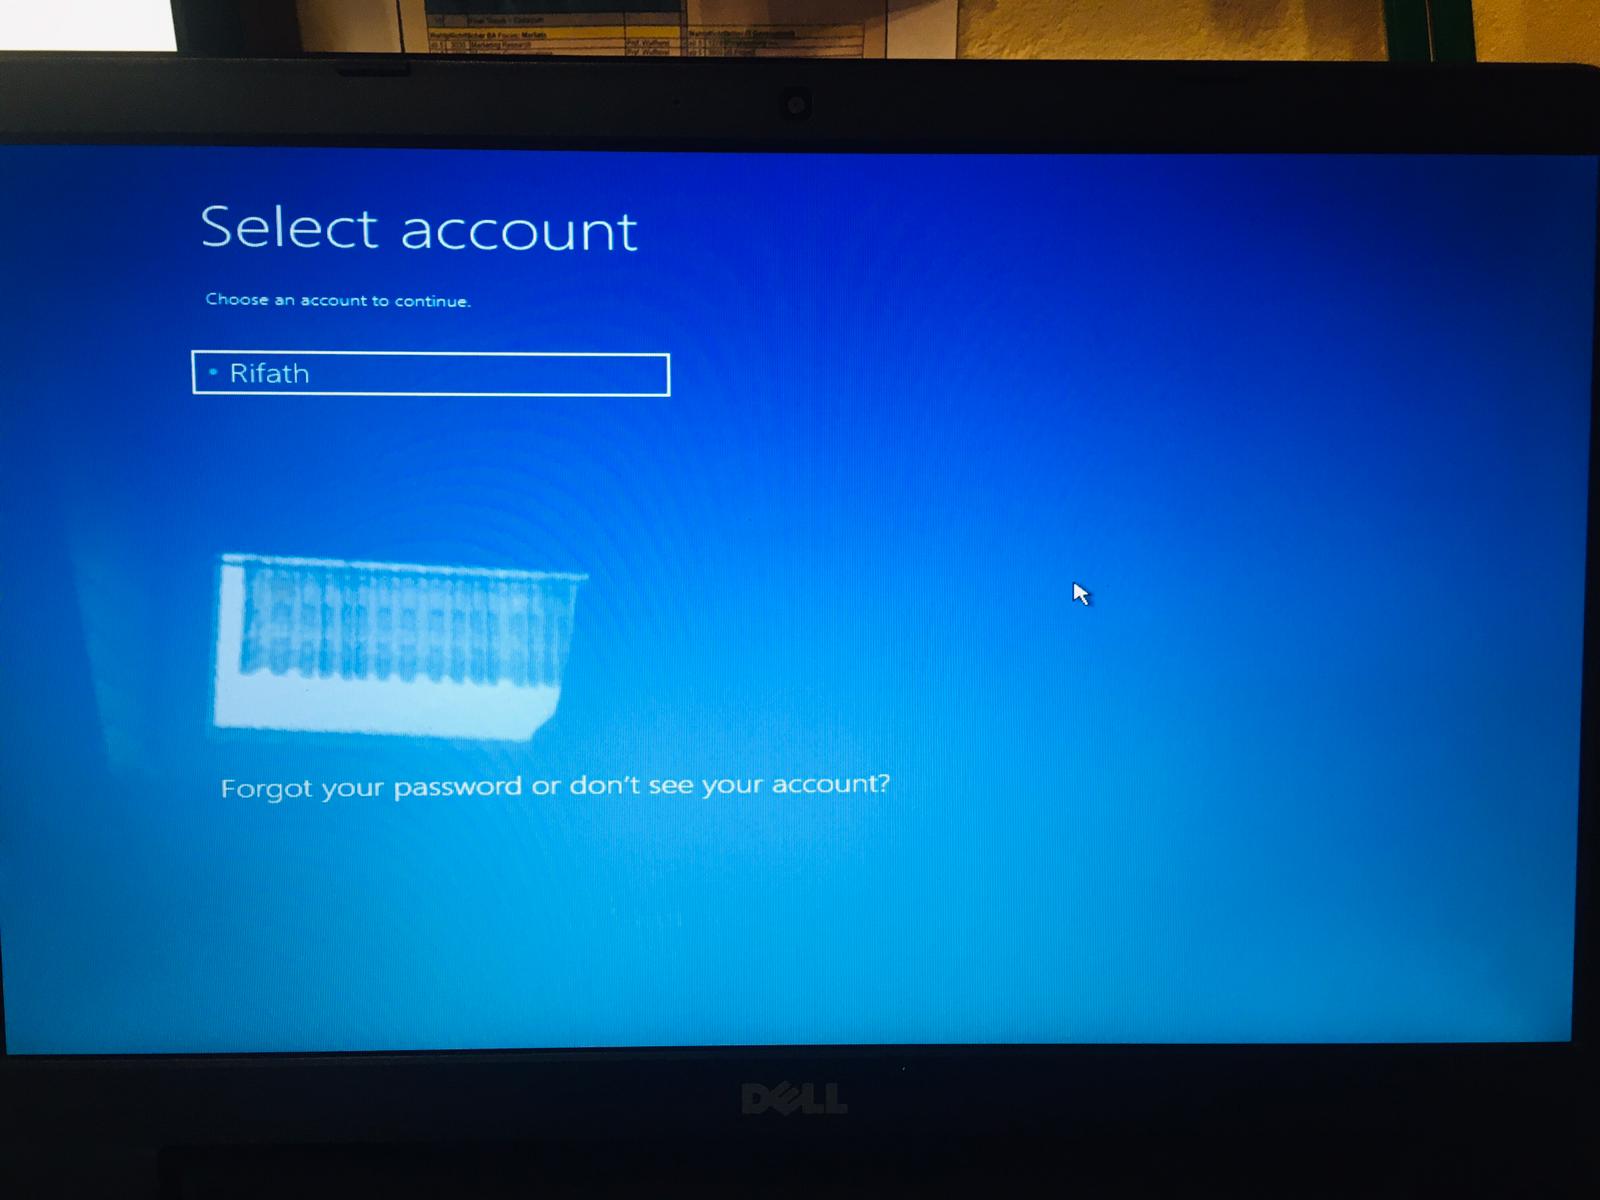 Windows 10 Incorrect password error with a blue screen 56ee4099-1a47-41a3-bae8-d2ba79341f37?upload=true.jpg